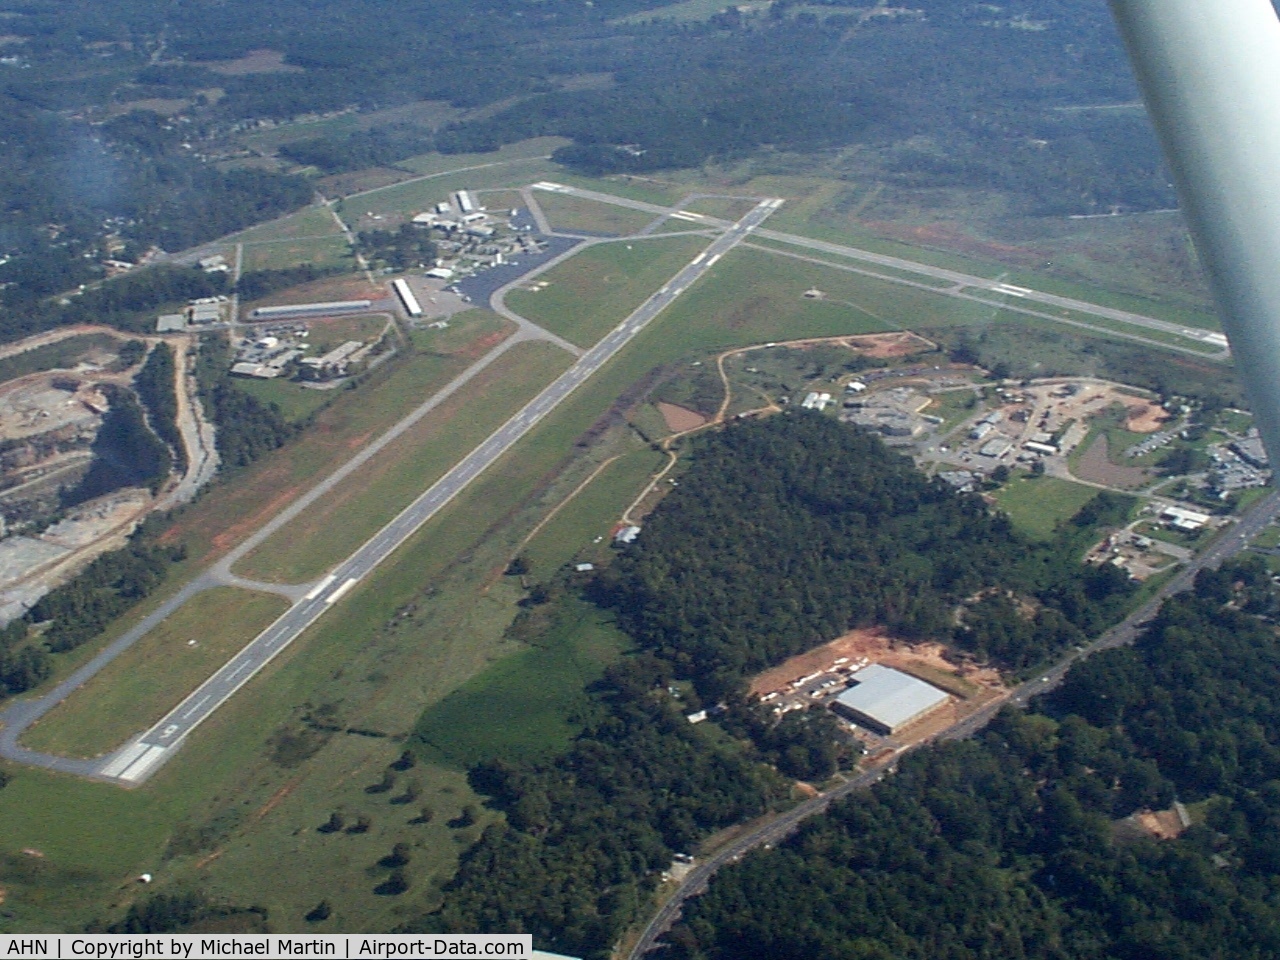 Athens/ben Epps Airport (AHN) - Ben Epps Field